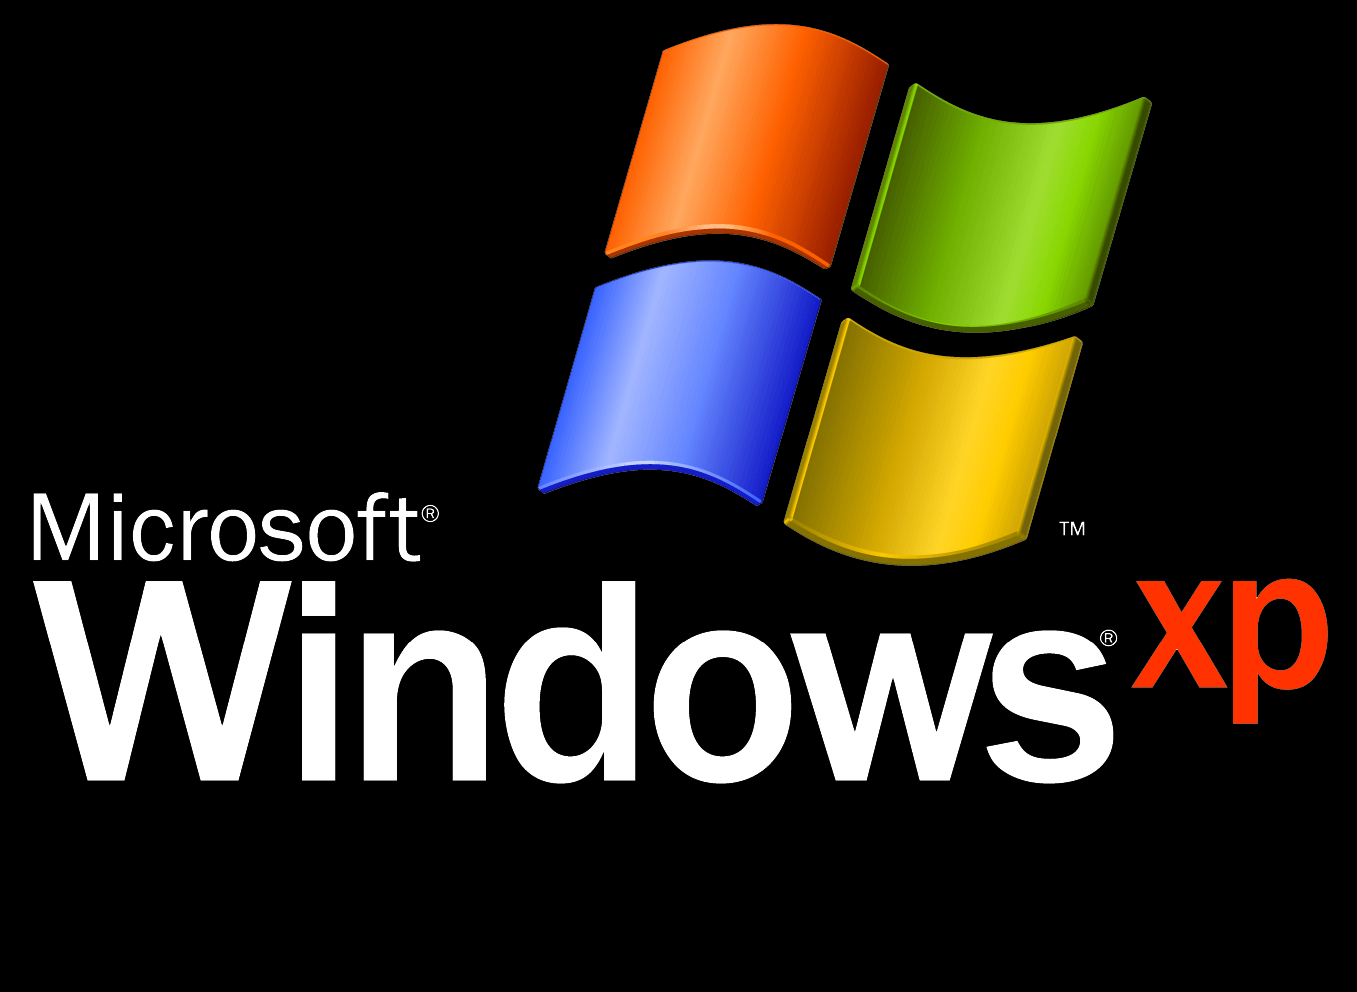 Windows XP Logo - Nintendofan12 - Windows XP logo 2 HD wallpaper and background